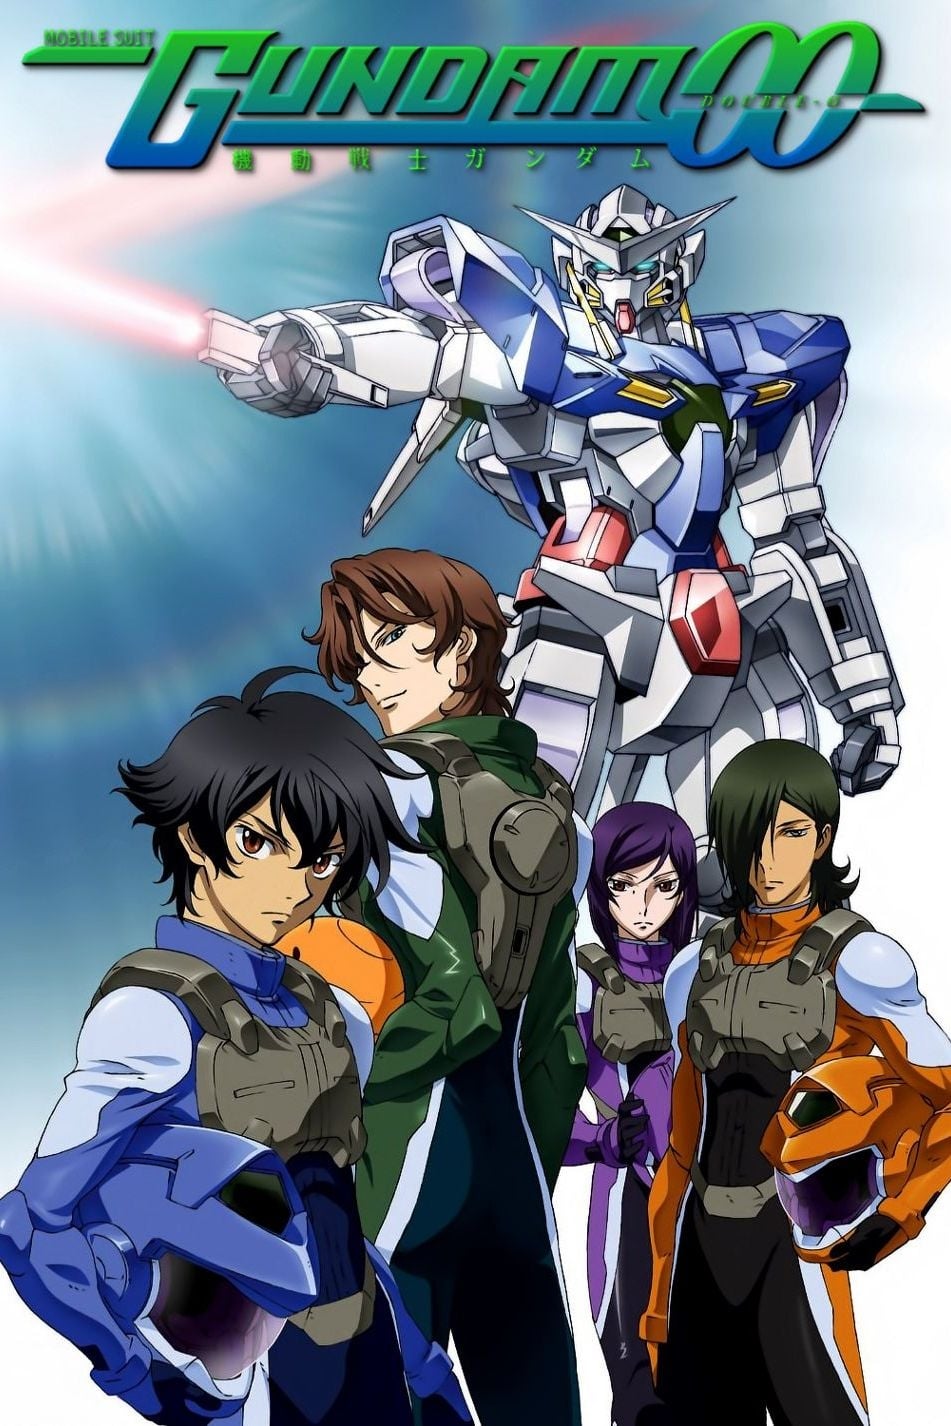 Anime Mobile Suit Gundam 00 Picture